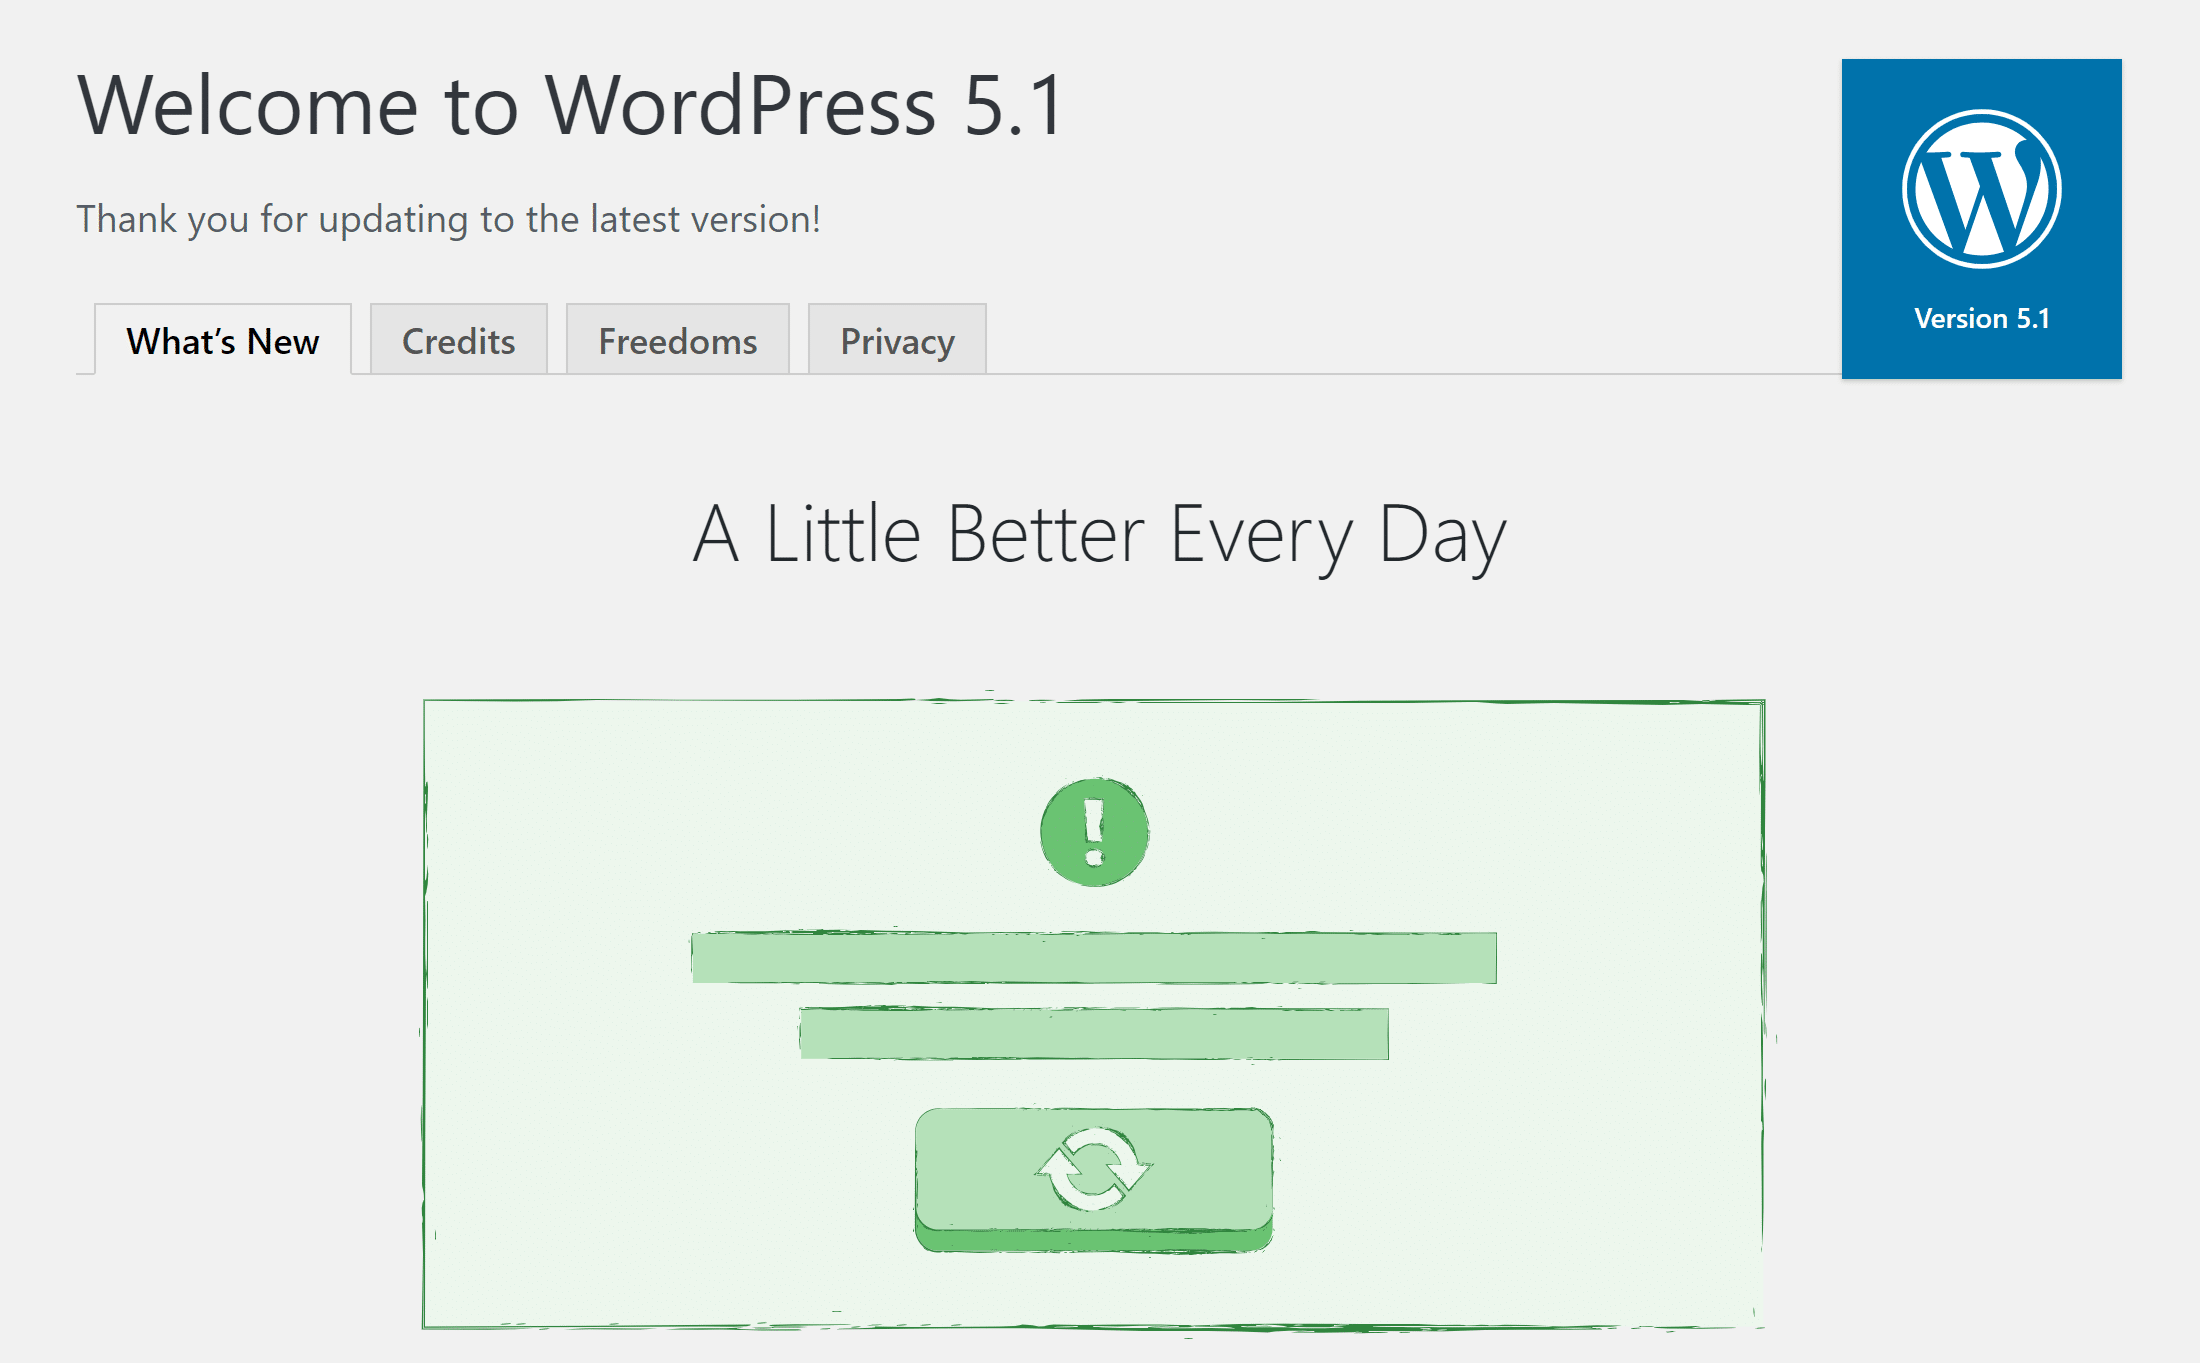 The WordPress 5.1 welcome screen